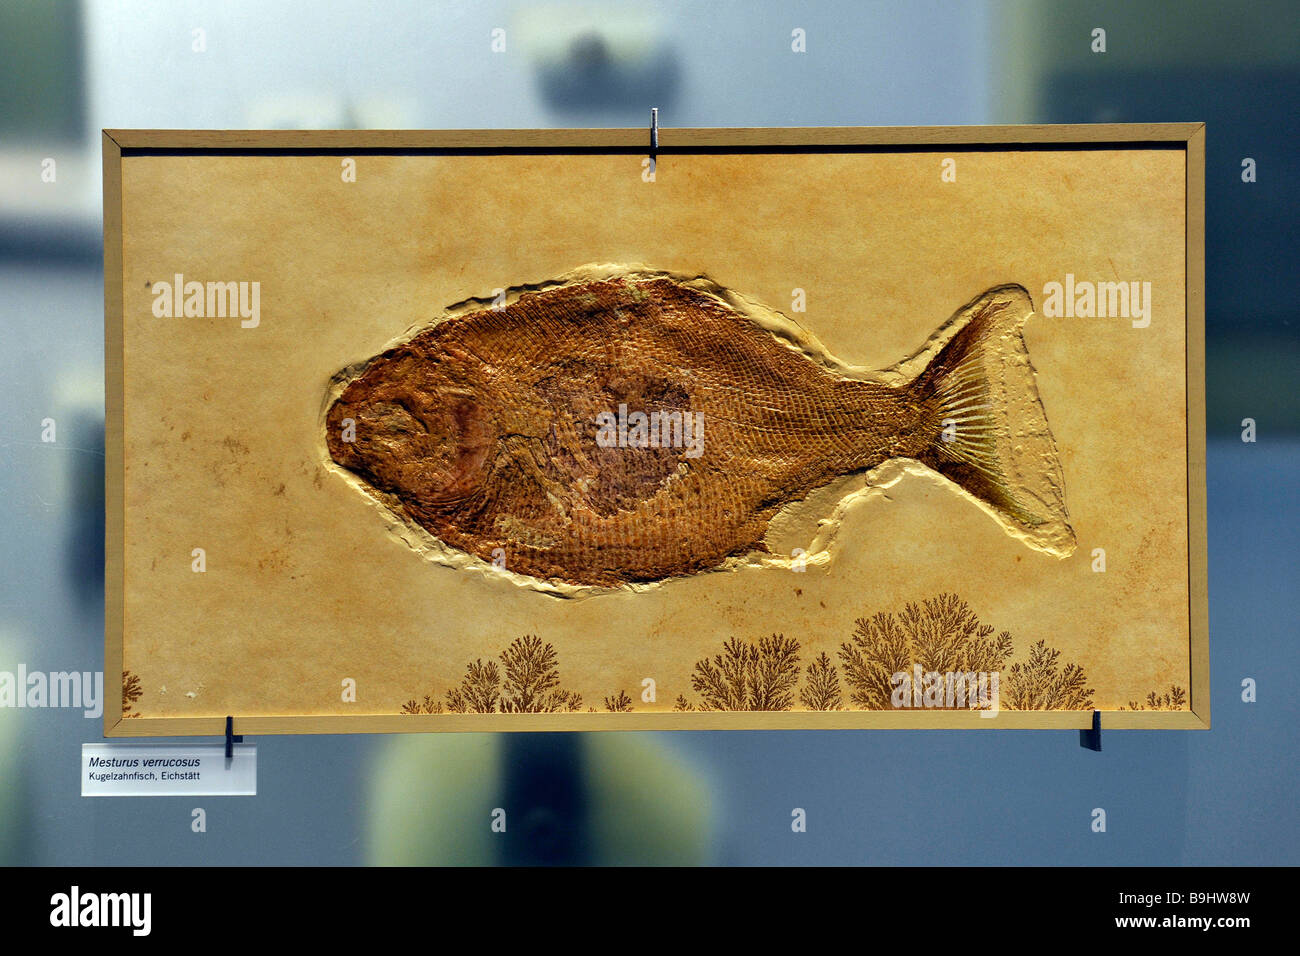 Fossilized Mesturus verrucosus fish, Museum fuer Naturkunde, Natural History Museum, Berlin, Germany, Europe Stock Photo